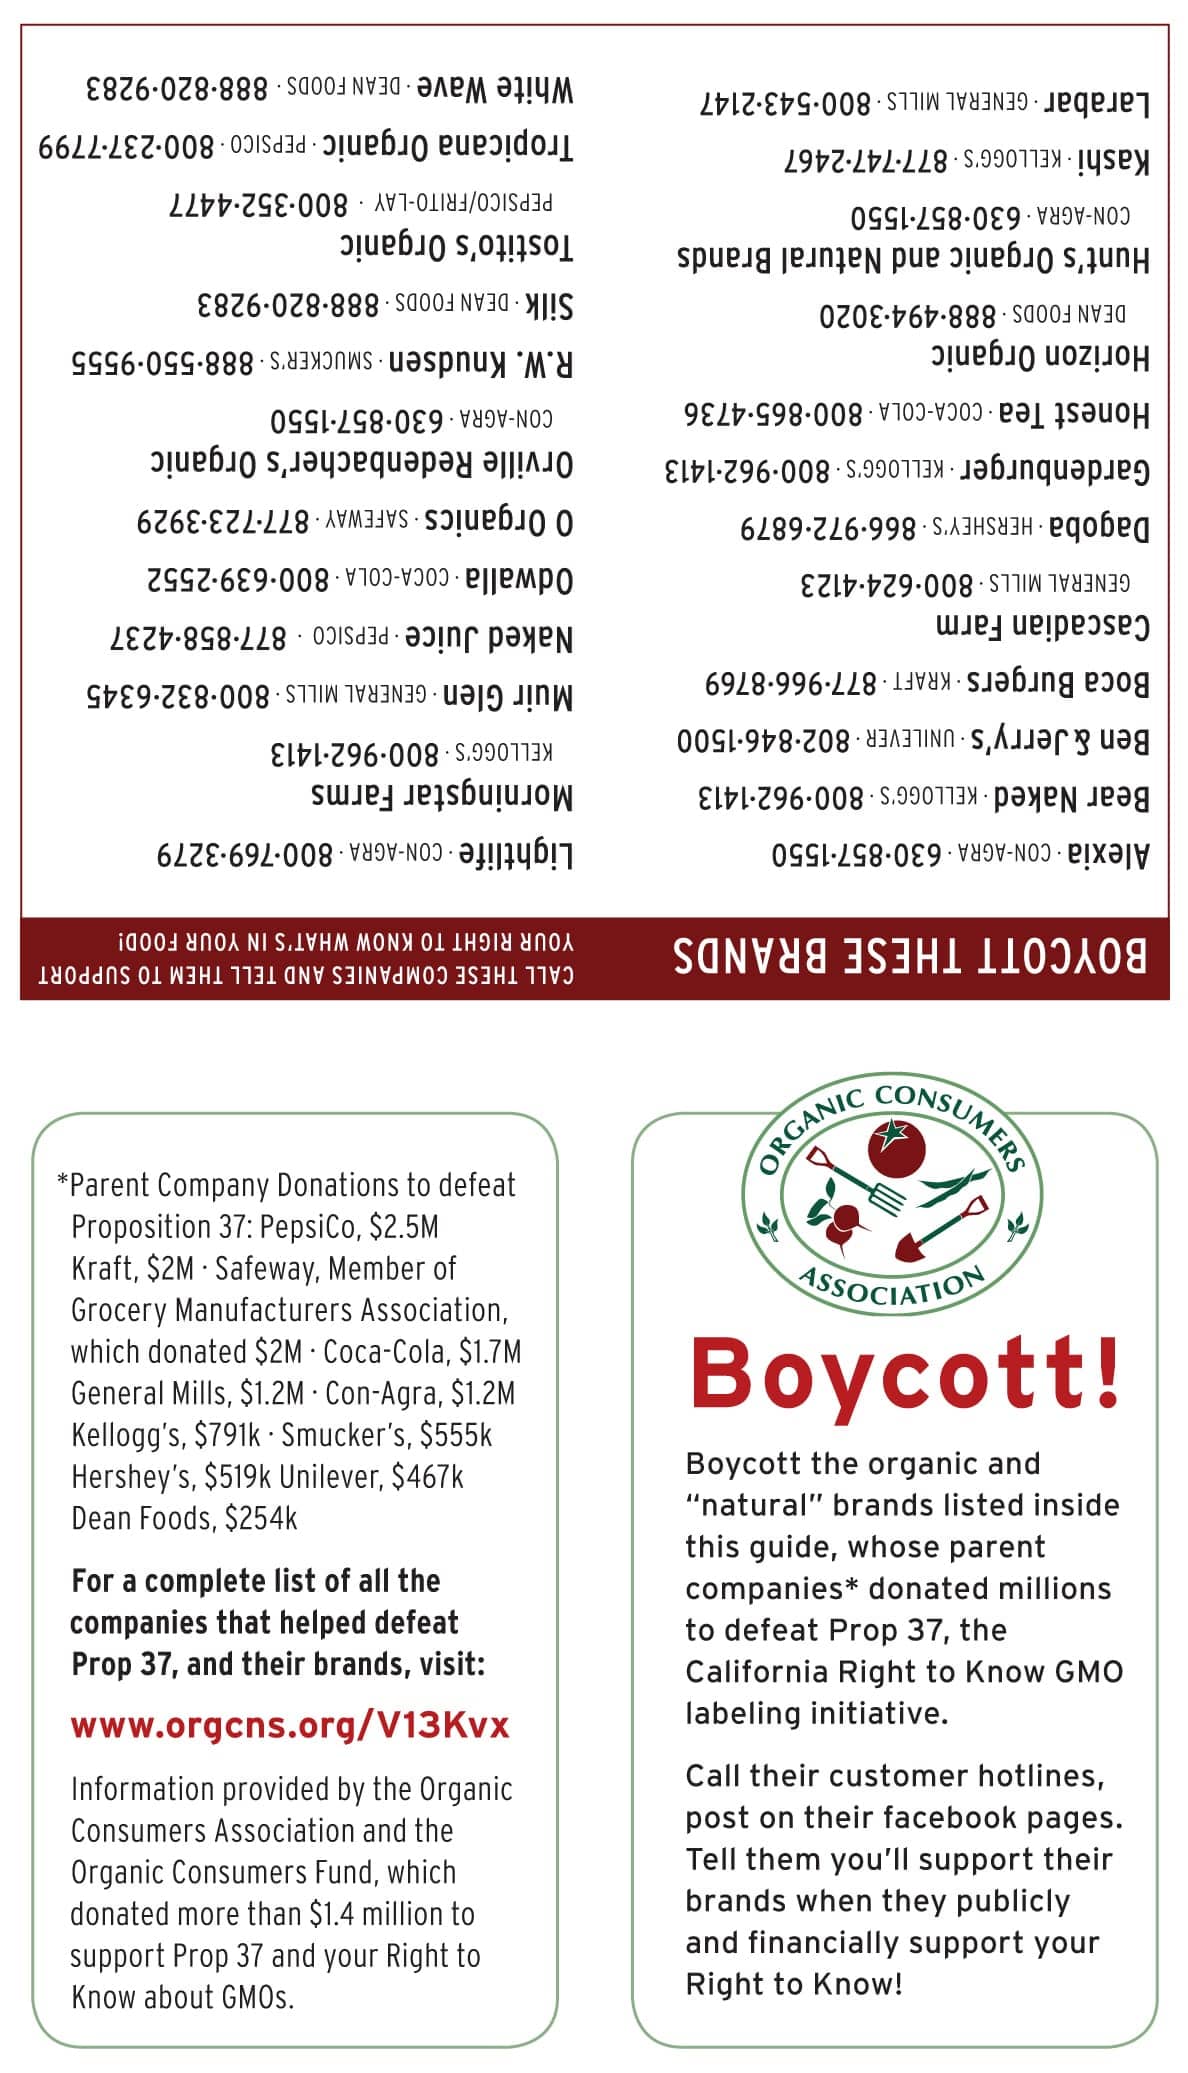 gmo-boycott, Boycott all the brands that helped kill Prop. 37, News & Views 